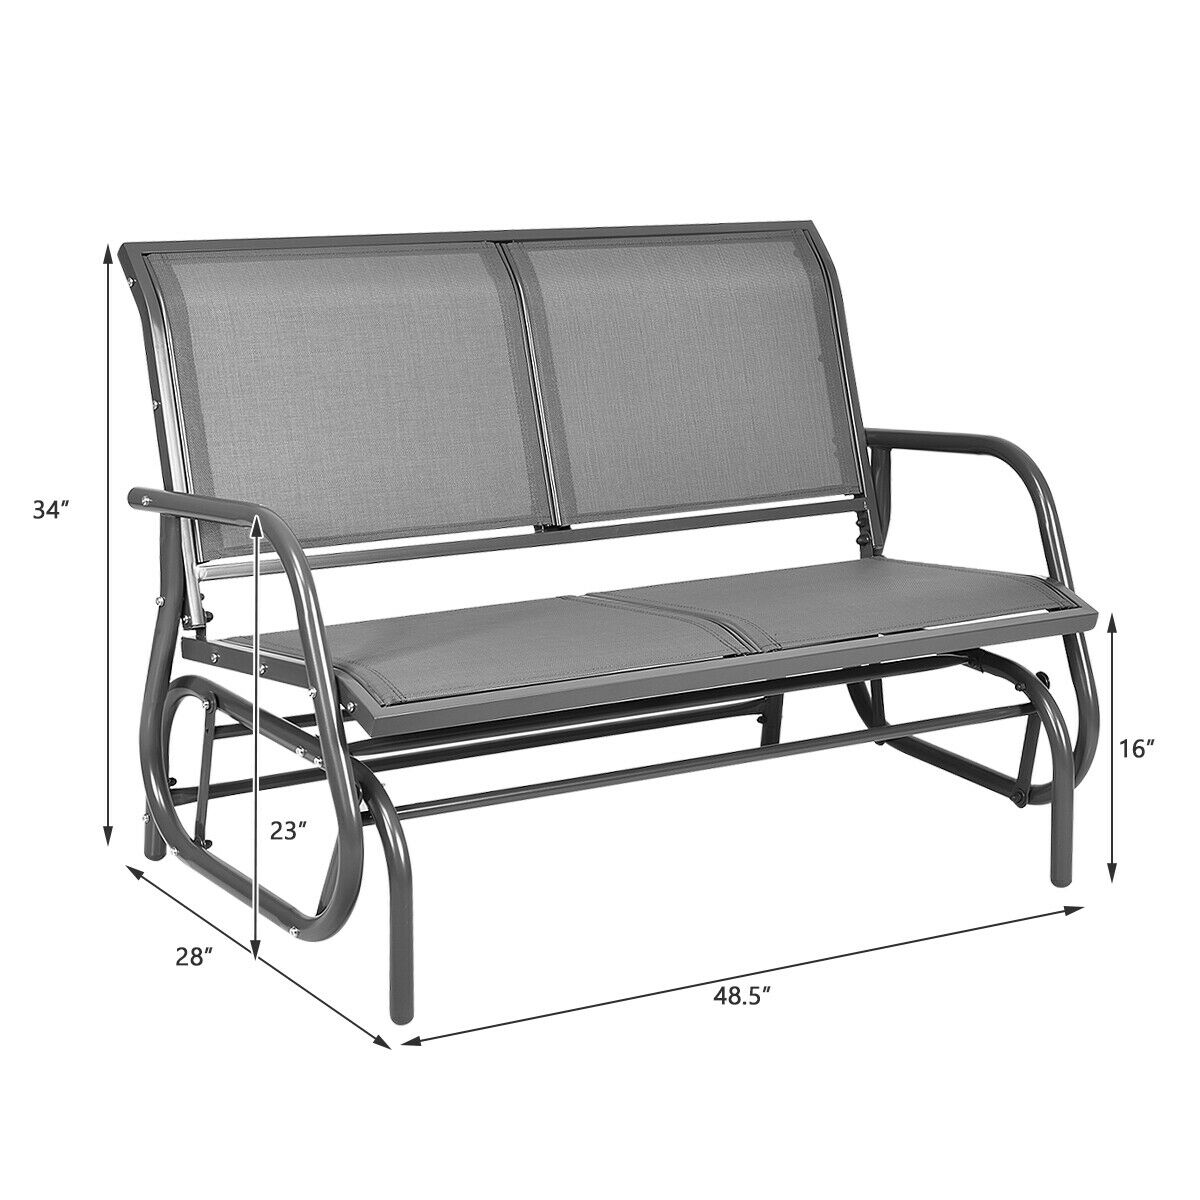 Gymax 48'' Outdoor Patio Swing Glider Bench Chair Loveseat Rocker Lounge Backyard Grey - image 2 of 10